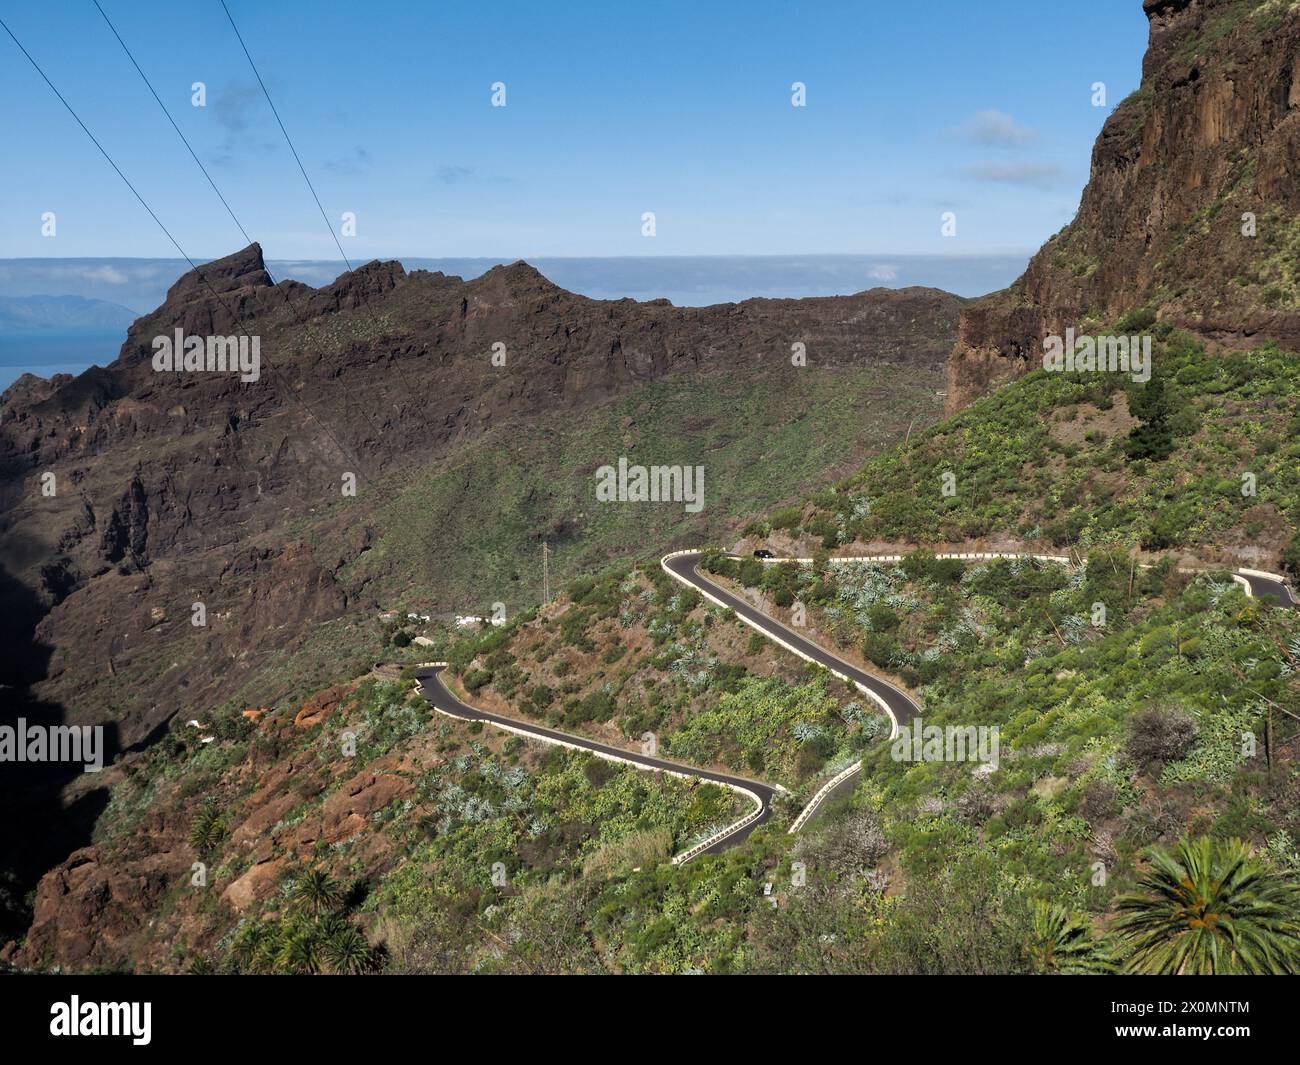 Masca Tenerife, Spain: panorama of the green territory of lava origin Stock Photo